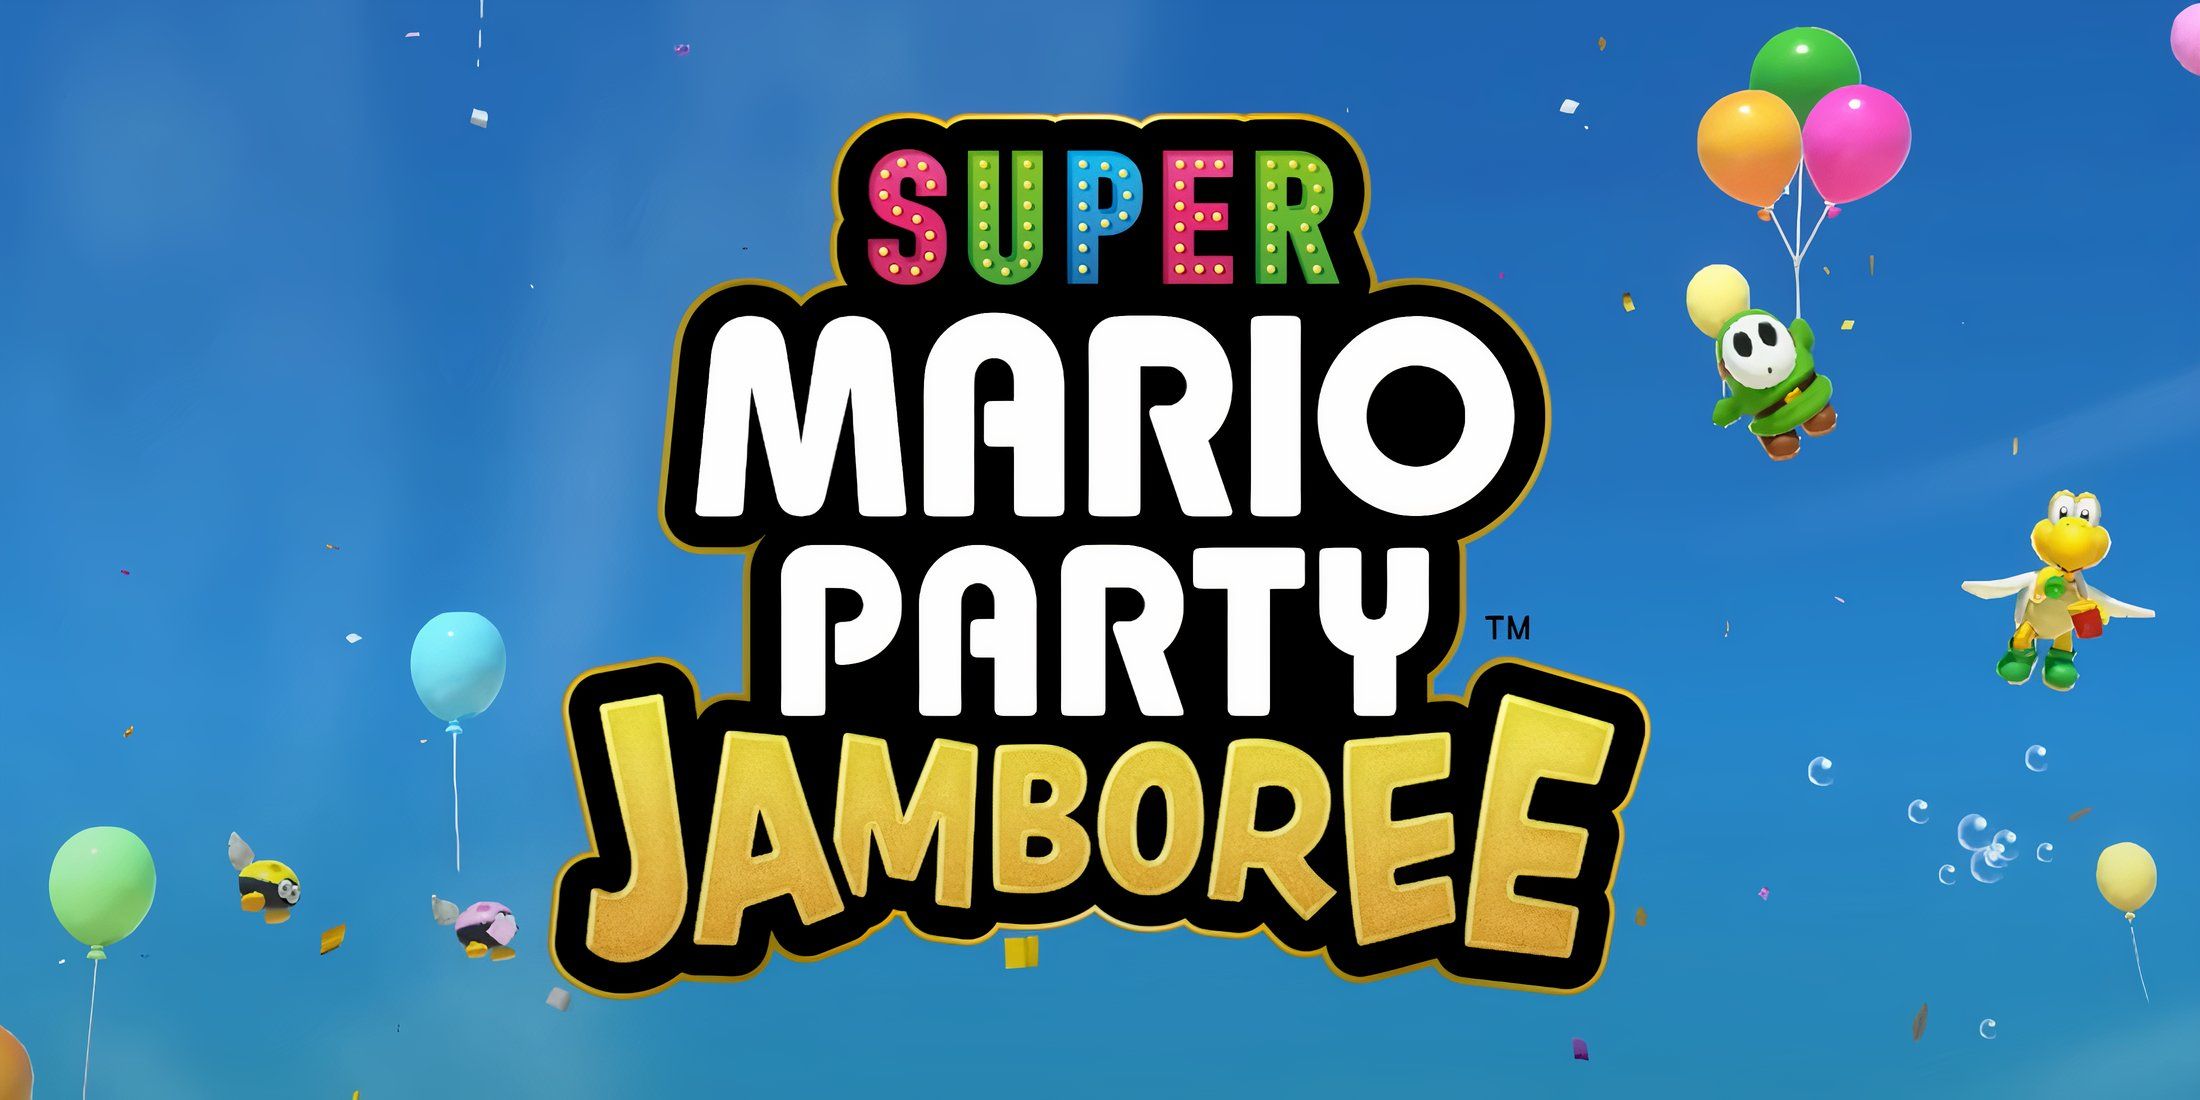 Super Mario Party Jamboree is a Gold Mine of Mini-Games